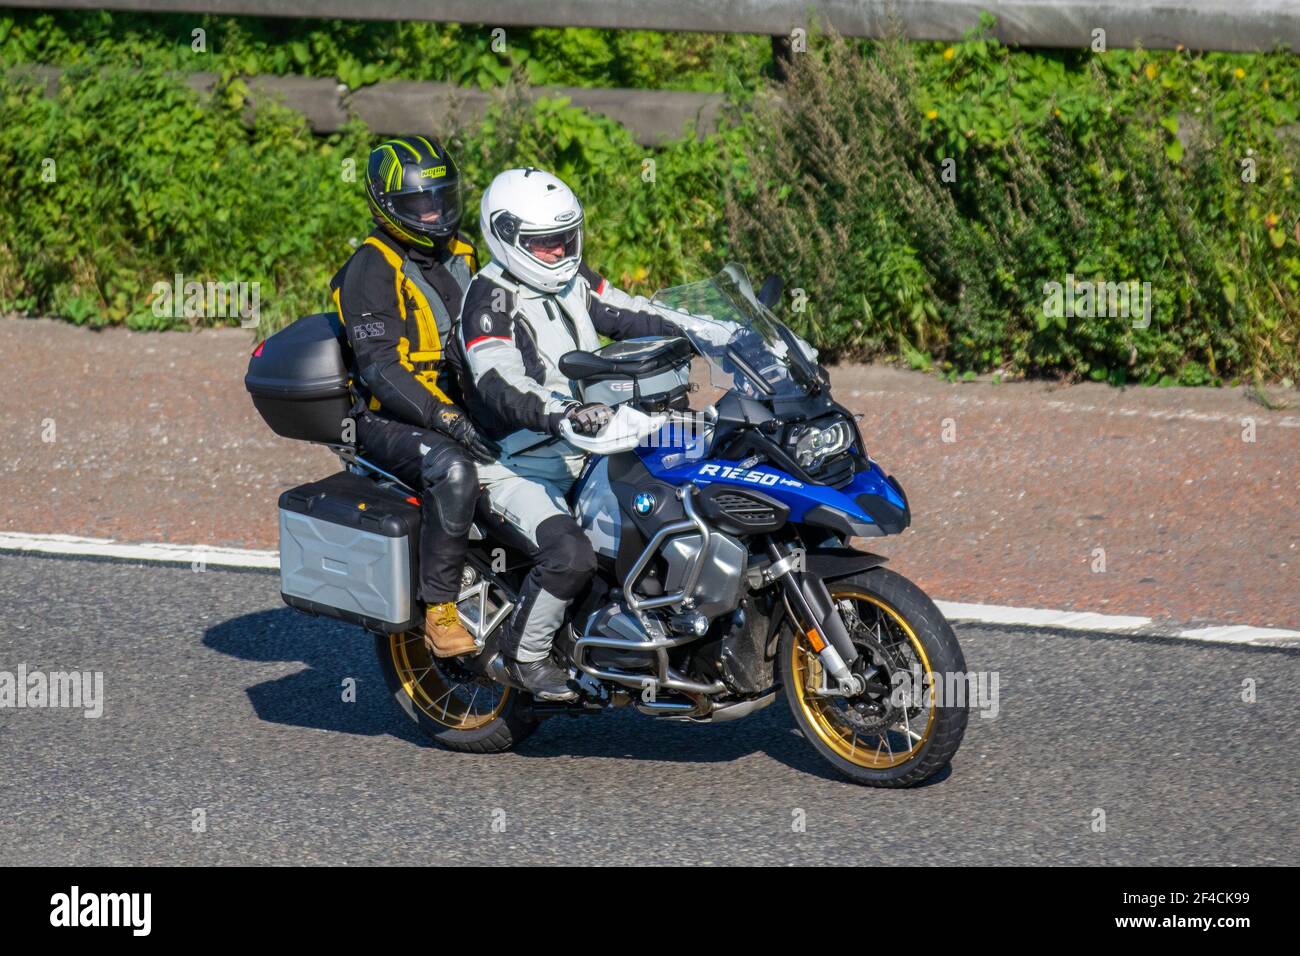 https://c8.alamy.com/comp/2F4CK99/bmw-r-1250-gs-motorad-motorbike-rider-two-wheeled-transport-motorcycles-vehicle-roads-motorbikes-motorcycle-bike-riders-motoring-in-manchester-uk-2F4CK99.jpg